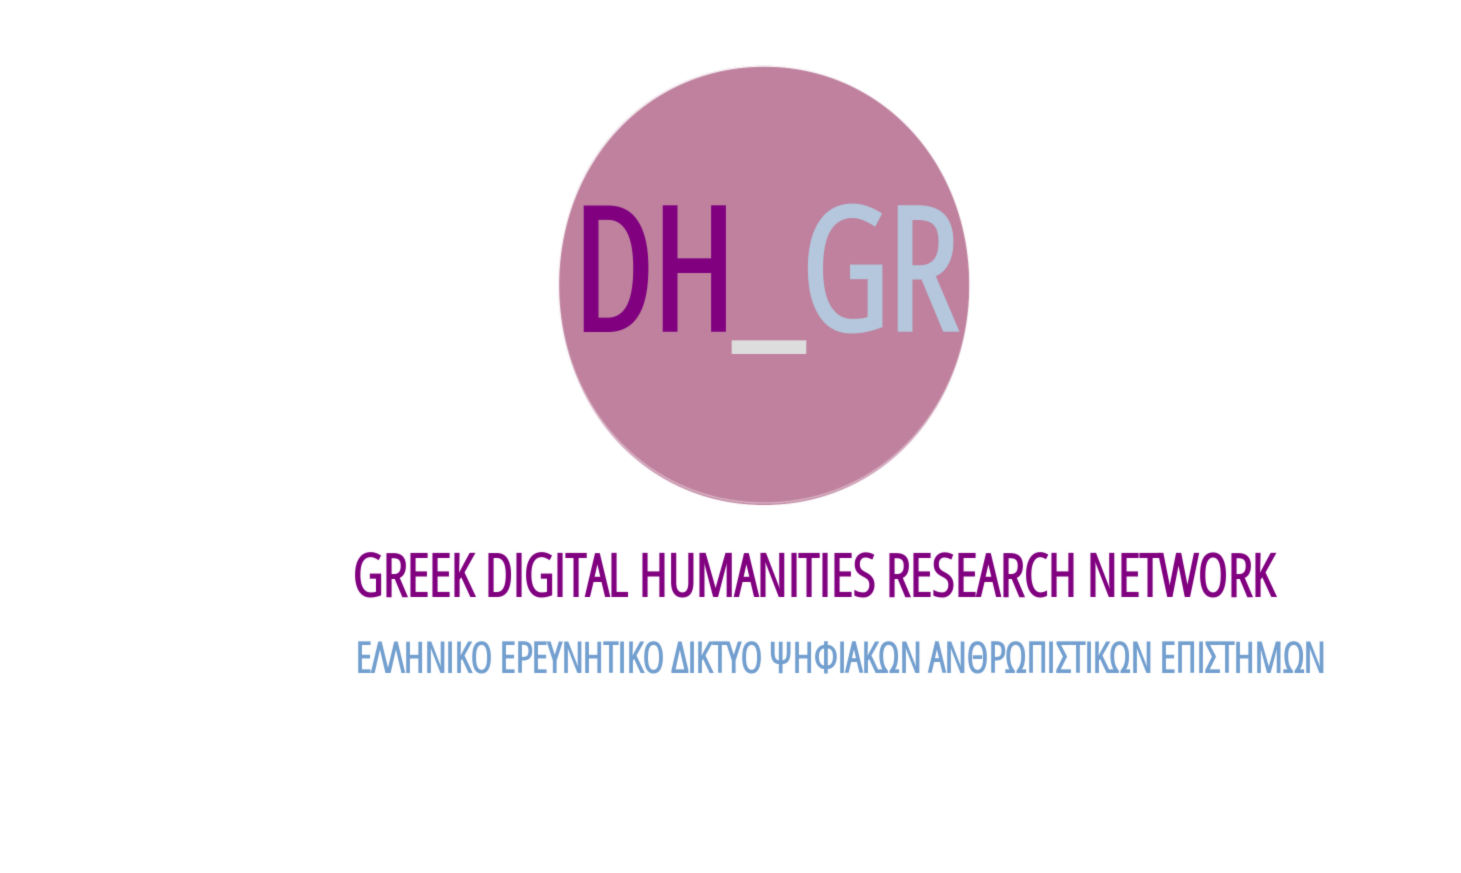 DHGR / The Greek Digital Humanities Research Network